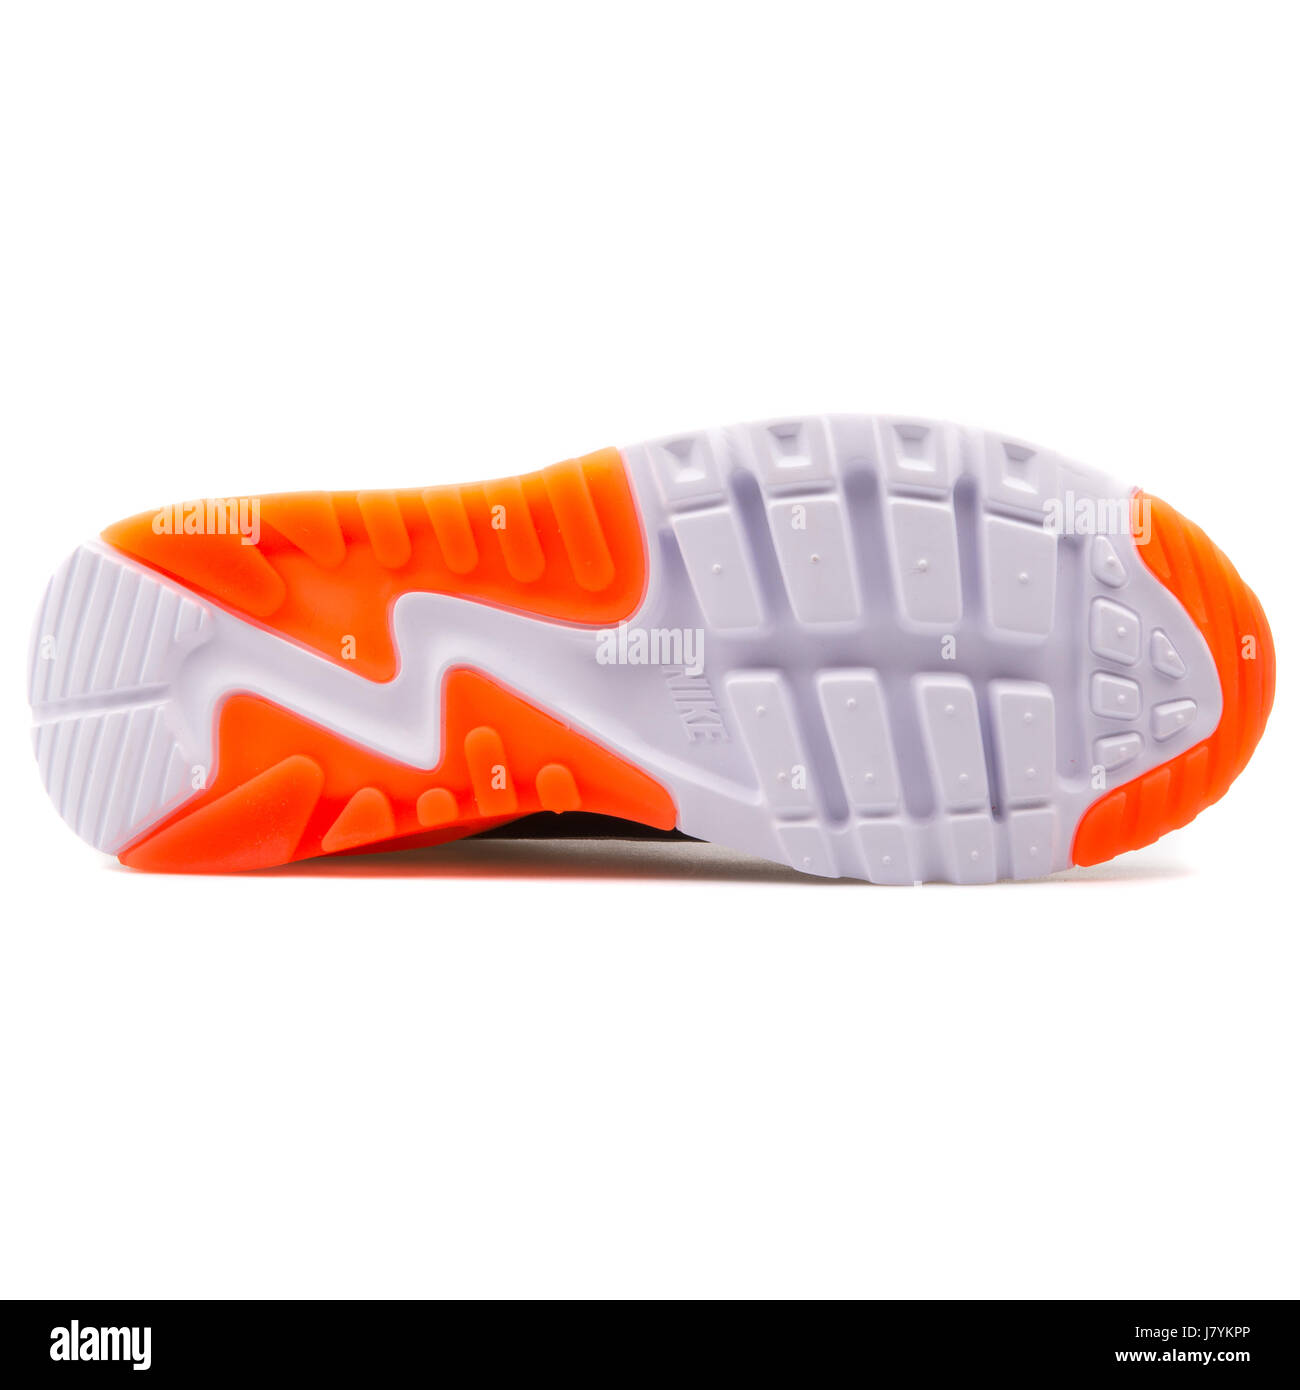 Nike Air Max 90 W Ultra BR gris y naranja Sneakers - 725061-001 Fotografía de stock - Alamy